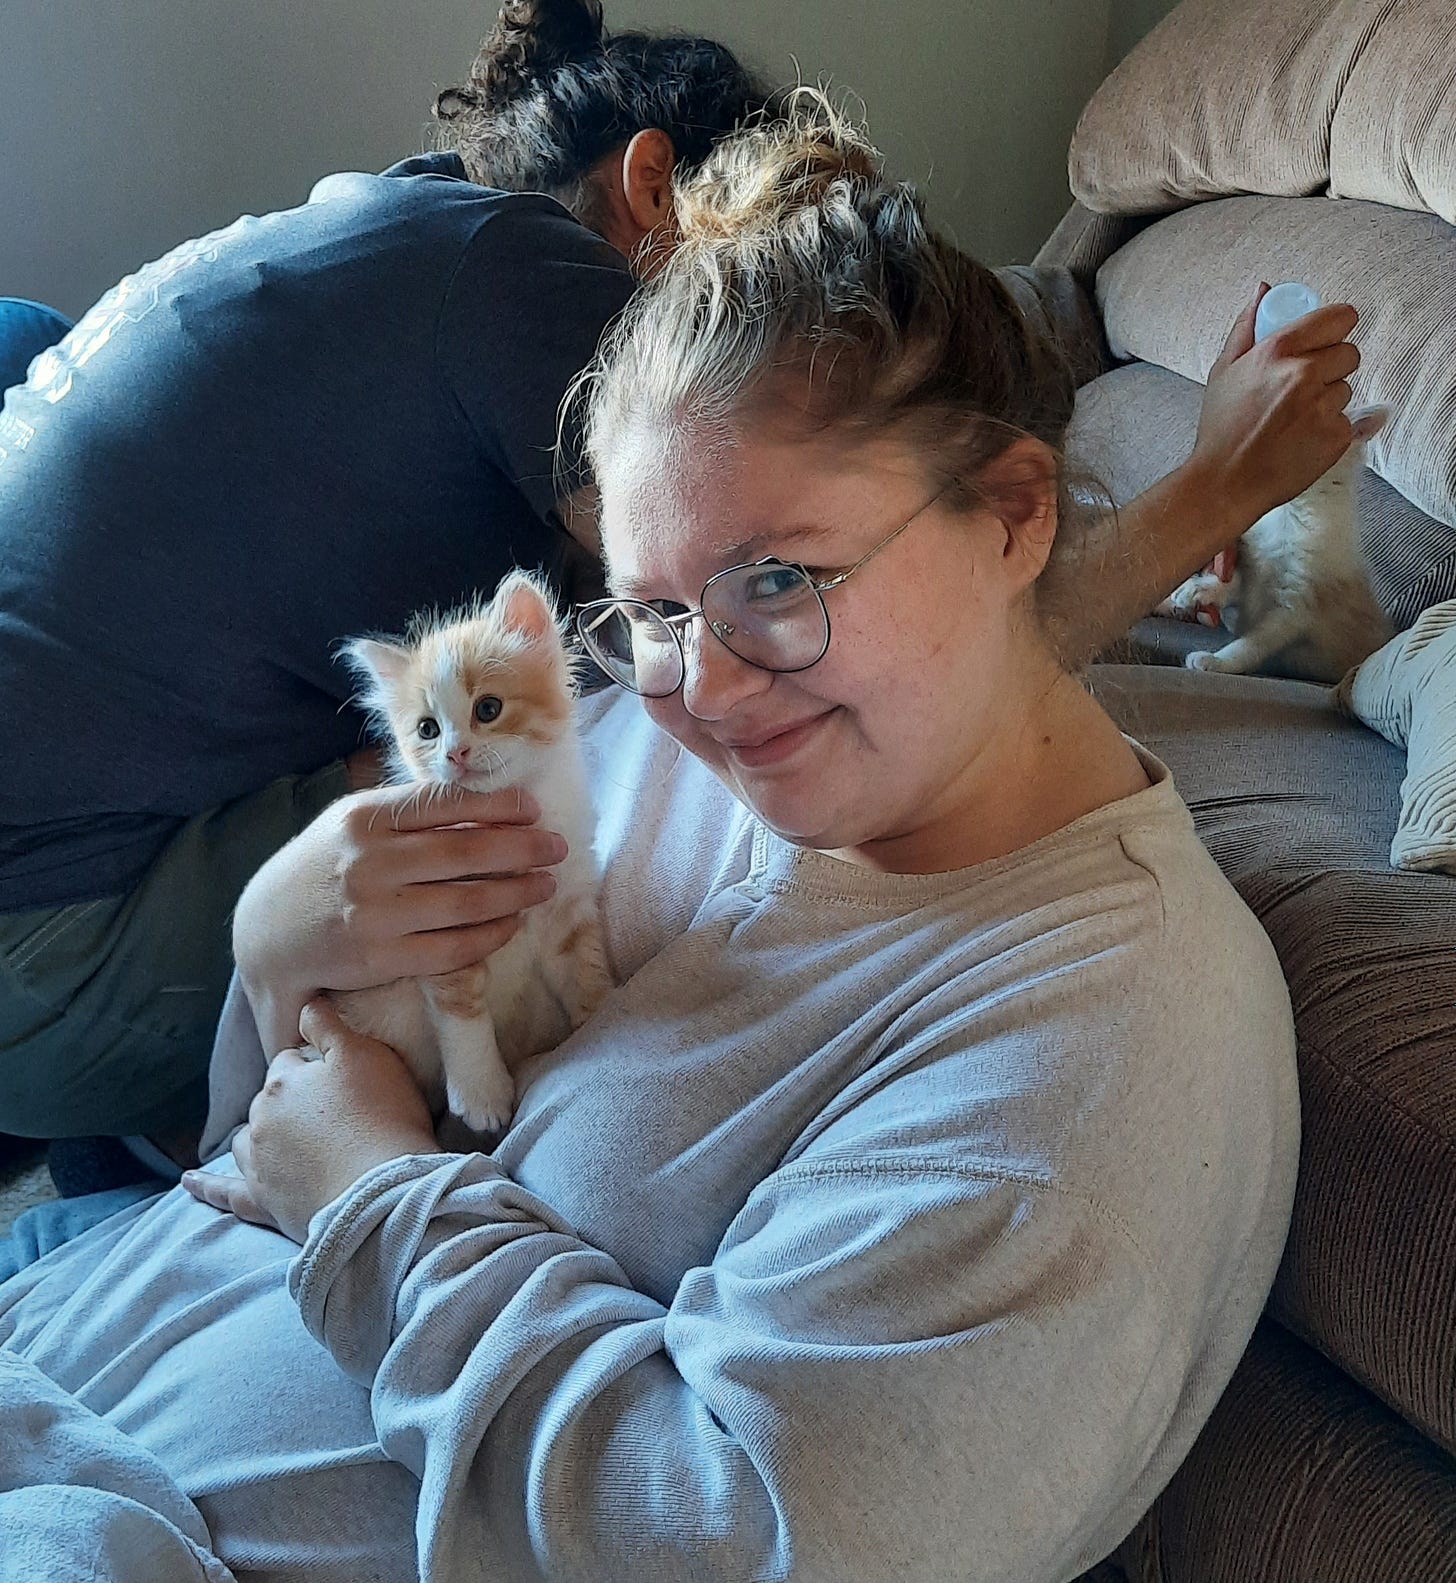 Amber smiling holding a kitten